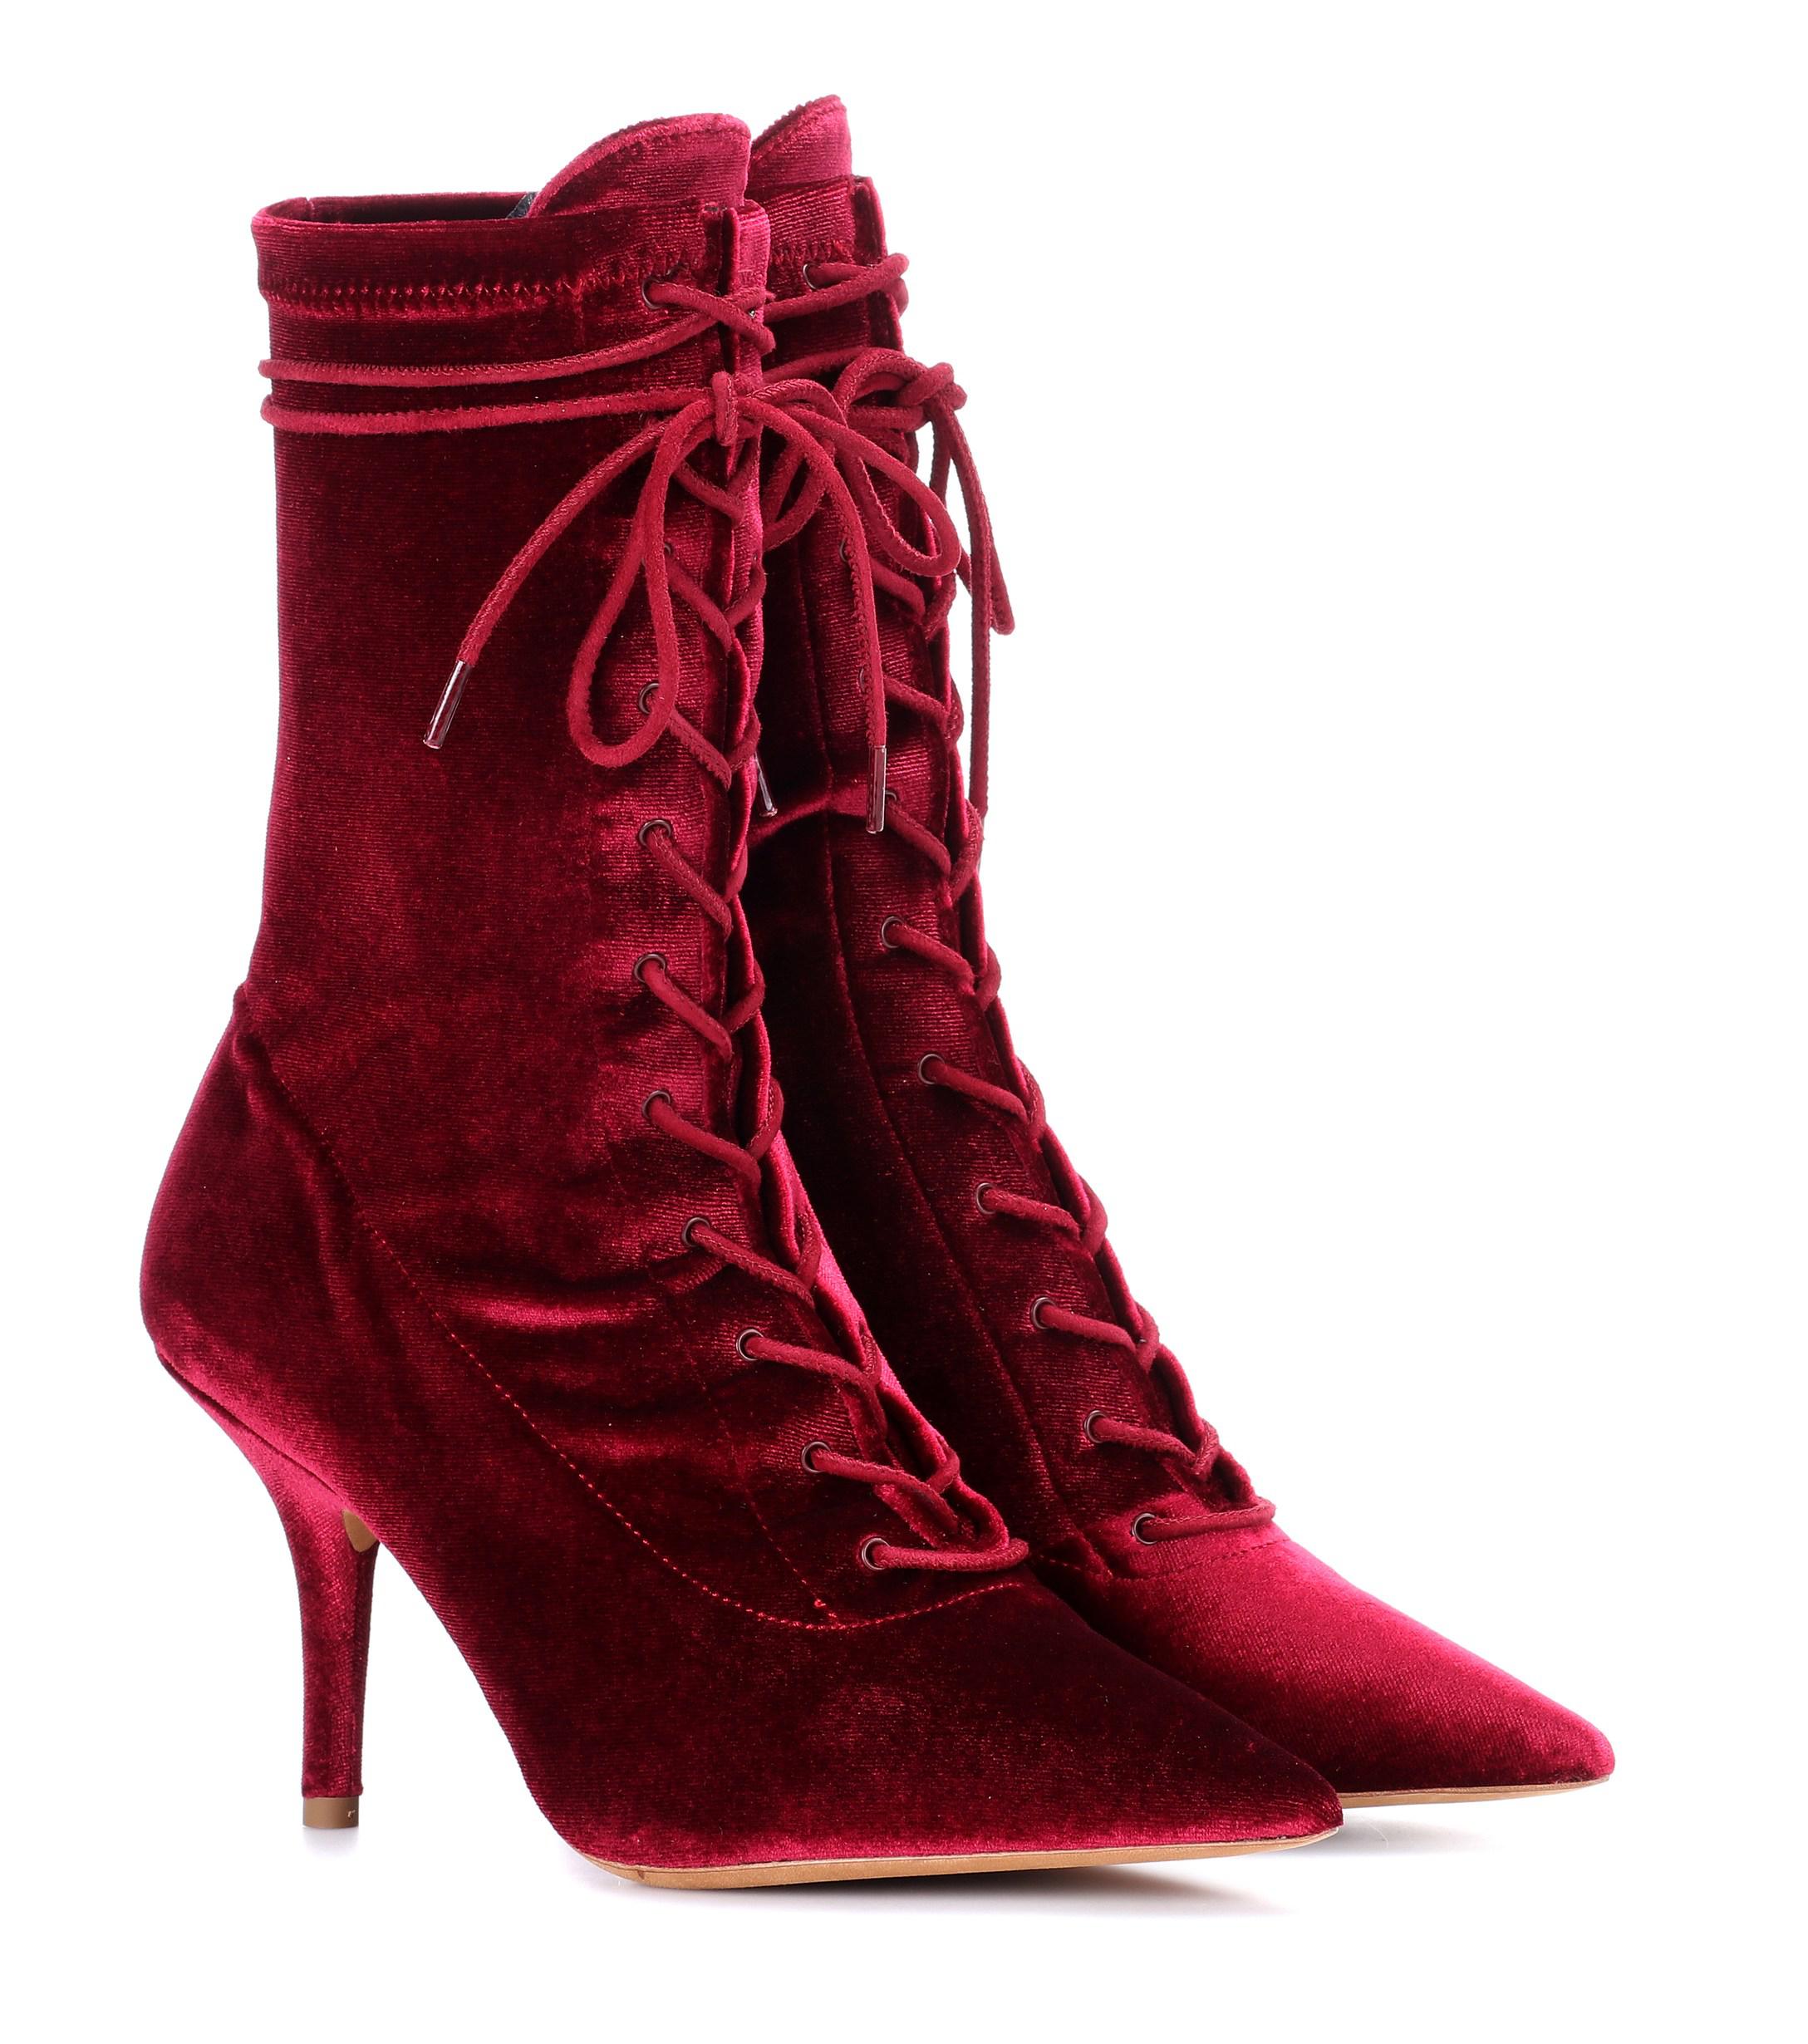 Yeezy Velvet Ankle Boots (season 5) in Oxblood (Red) - Lyst